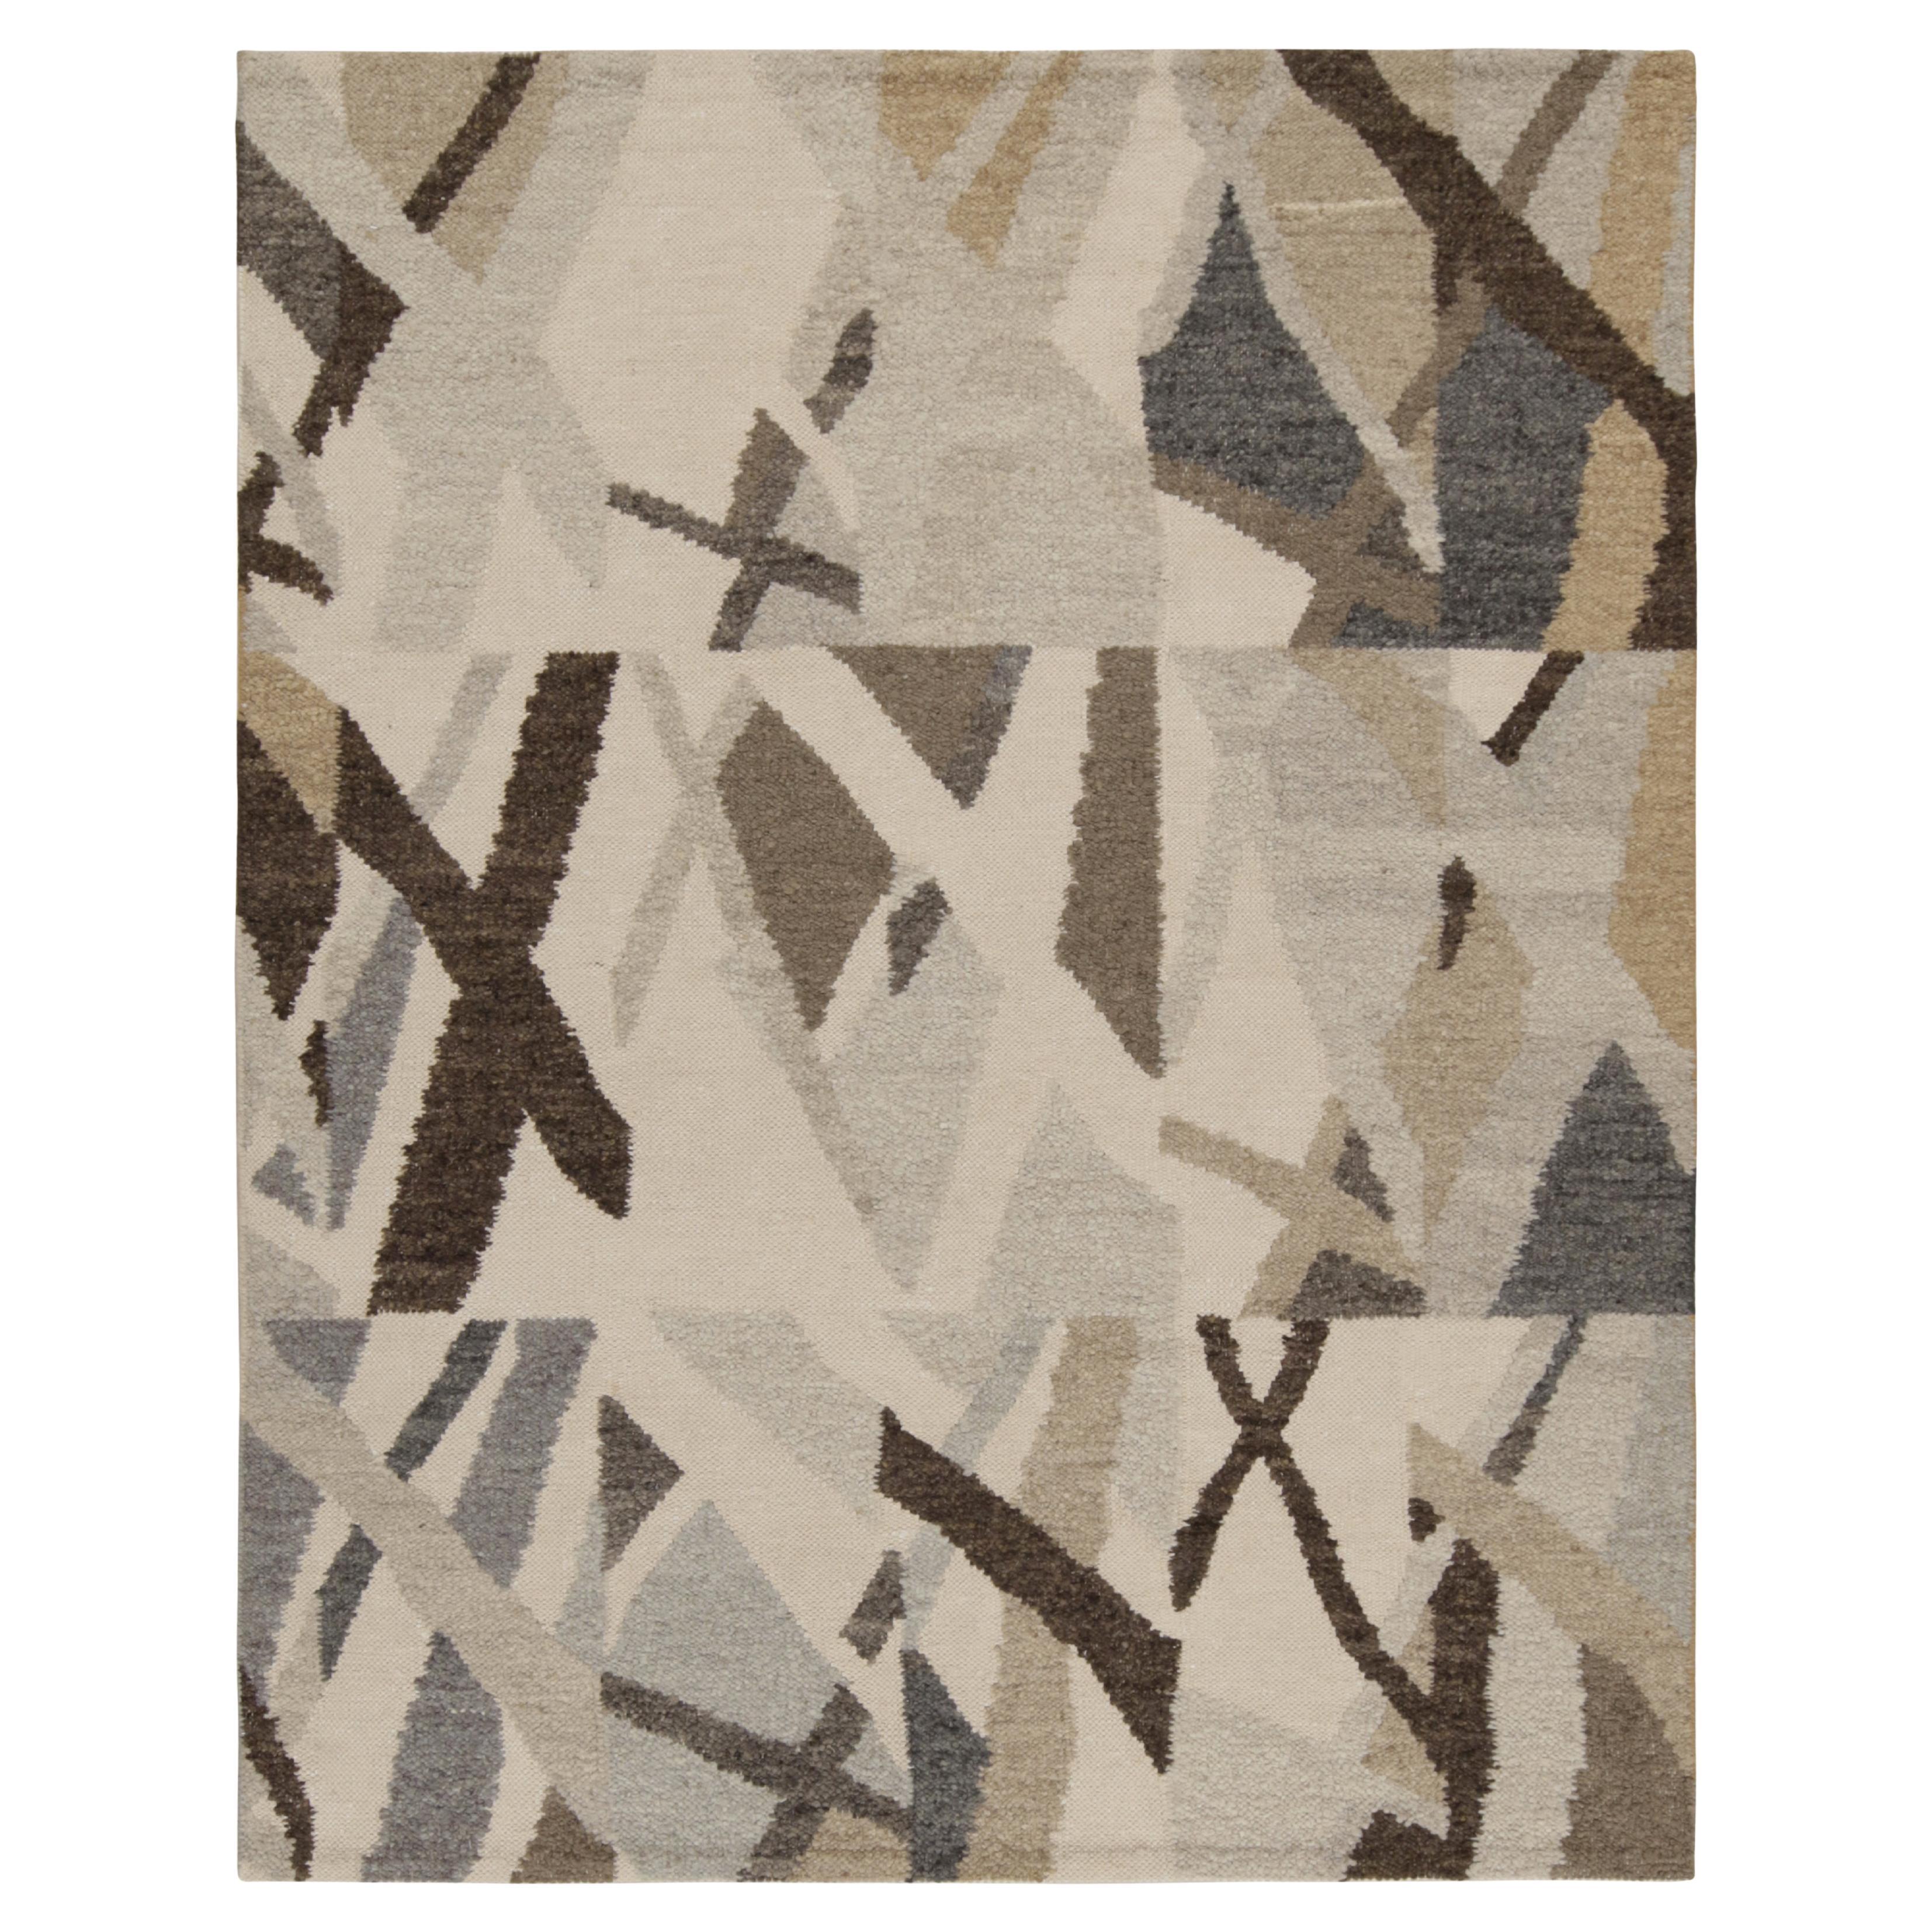 Rug & Kilim’s Scandinavian Style Kilim in Gray and Beige-Brown Geometric Pattern For Sale